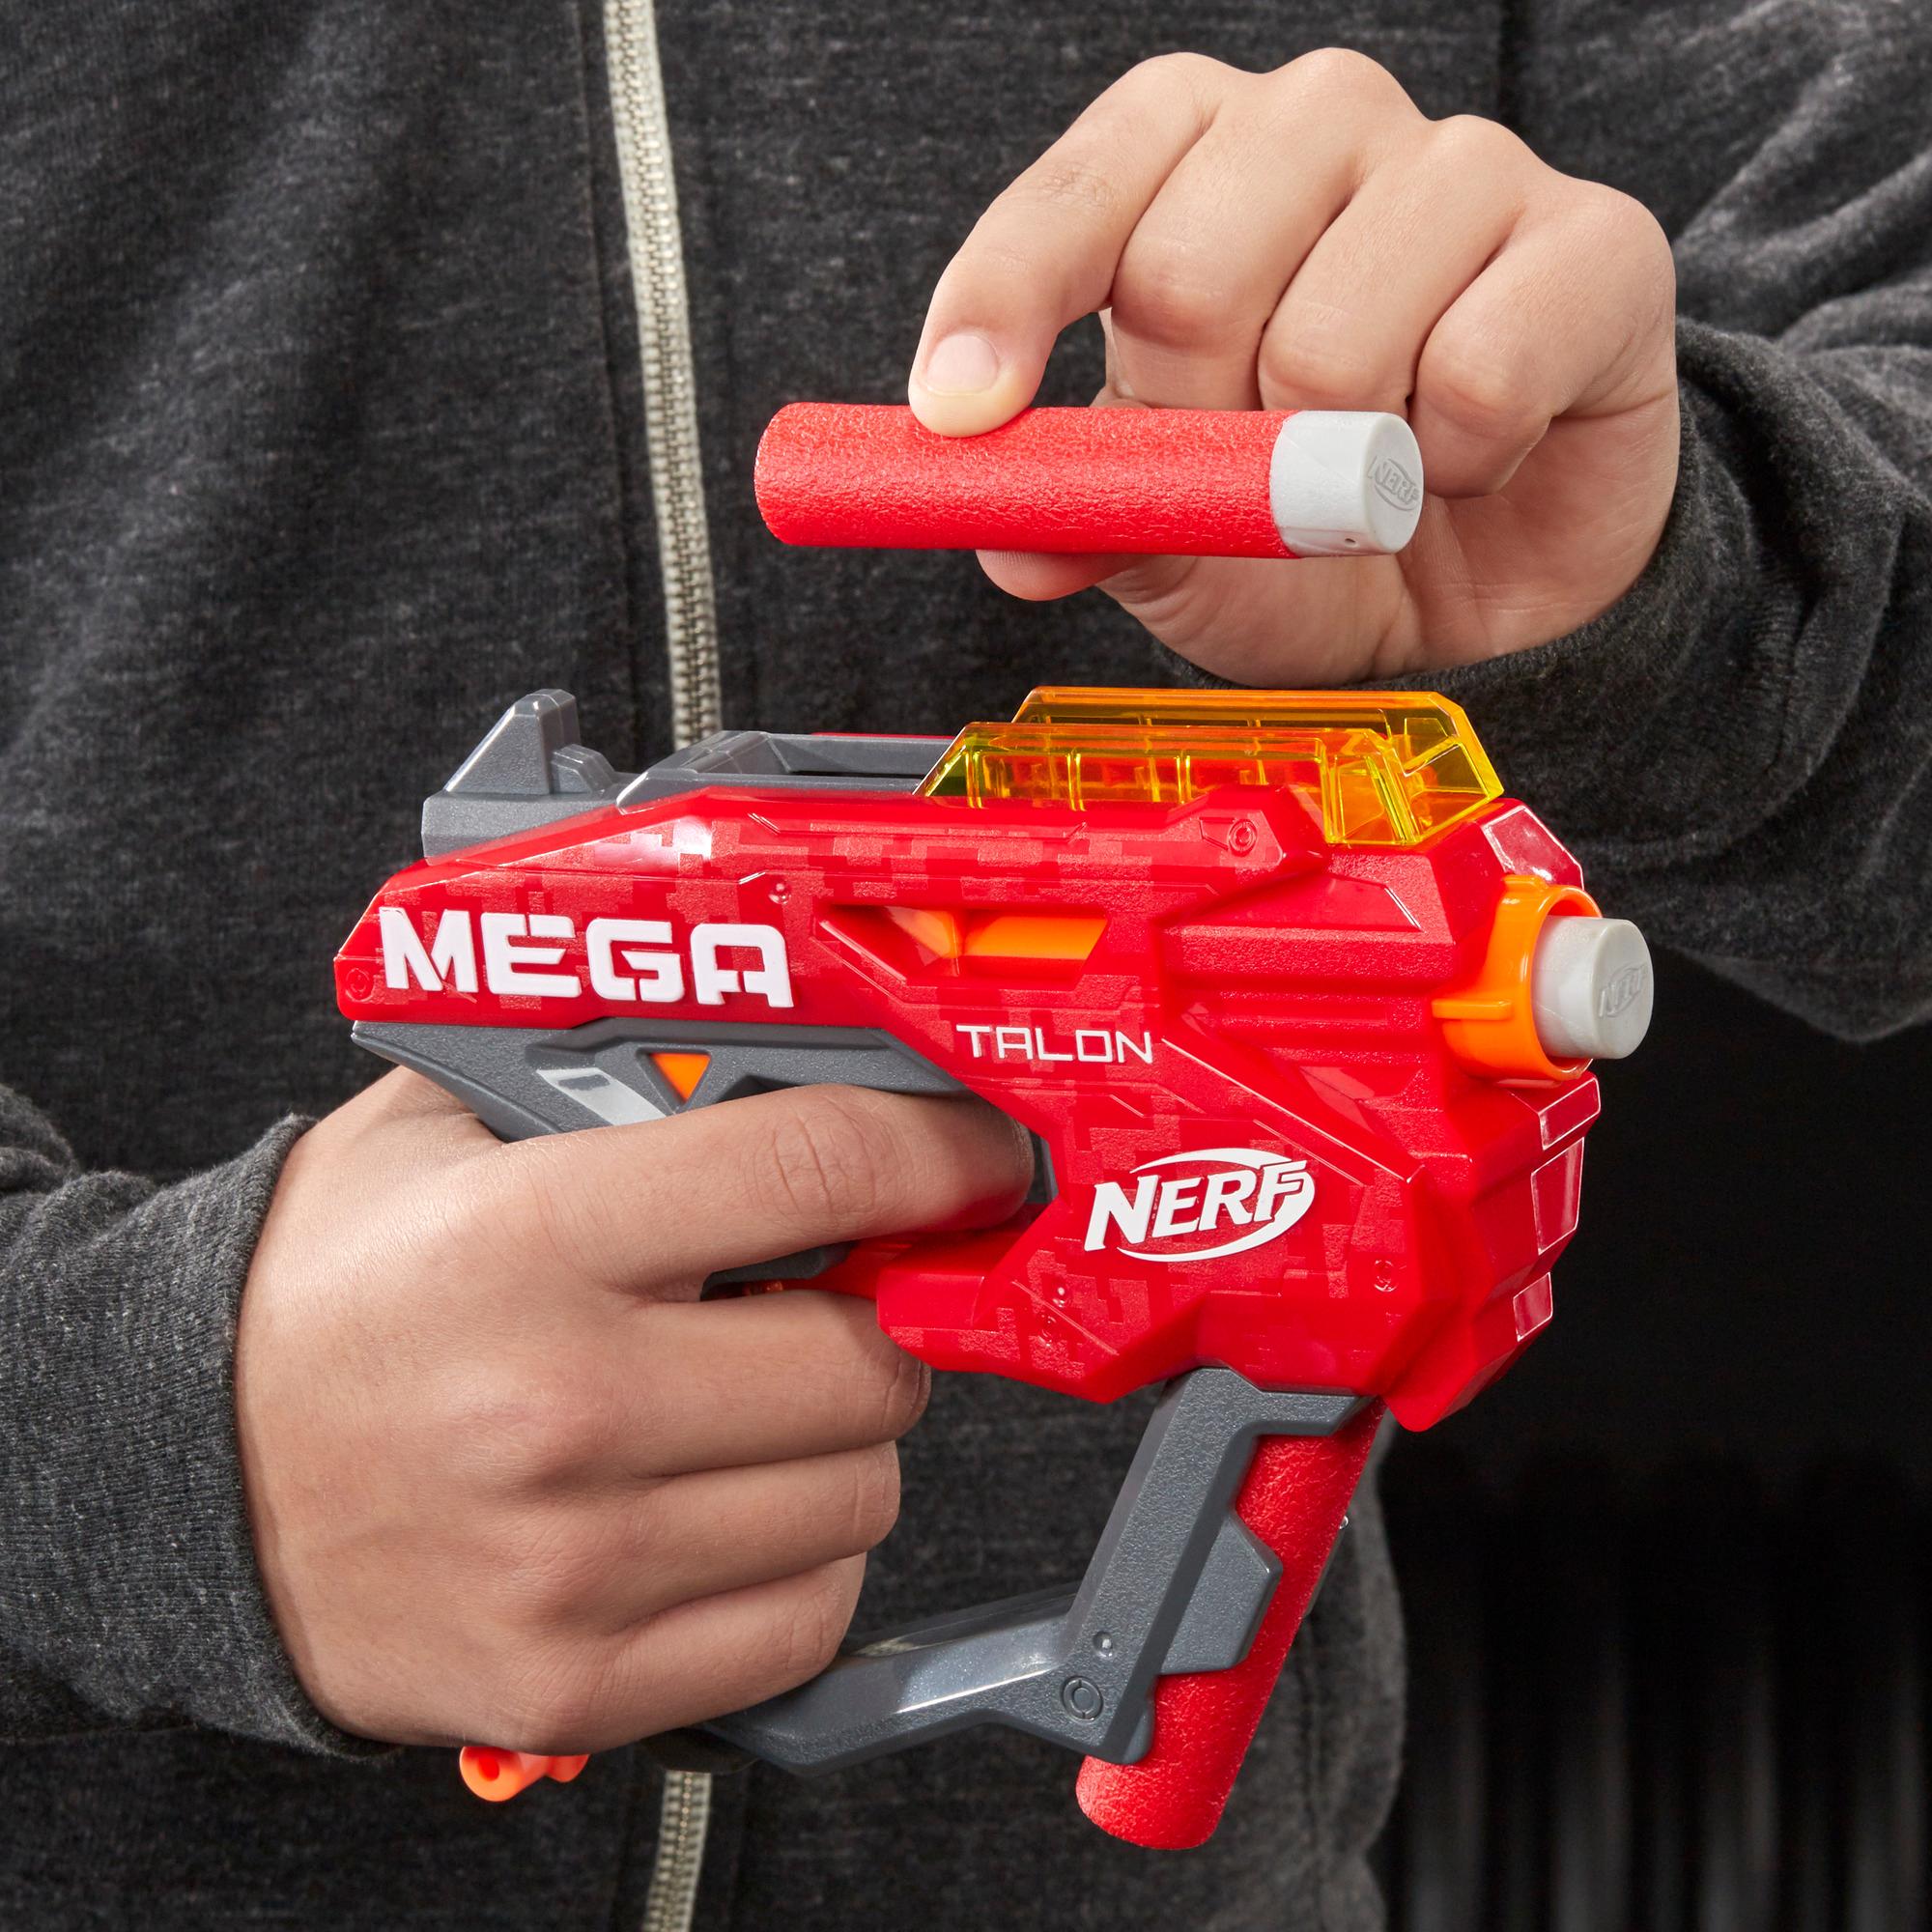 Nerf Mega Talon Blaster – enthält 3 AccuStrike Nerf Mega Darts – für Kinder, Teenager, Erwachsene